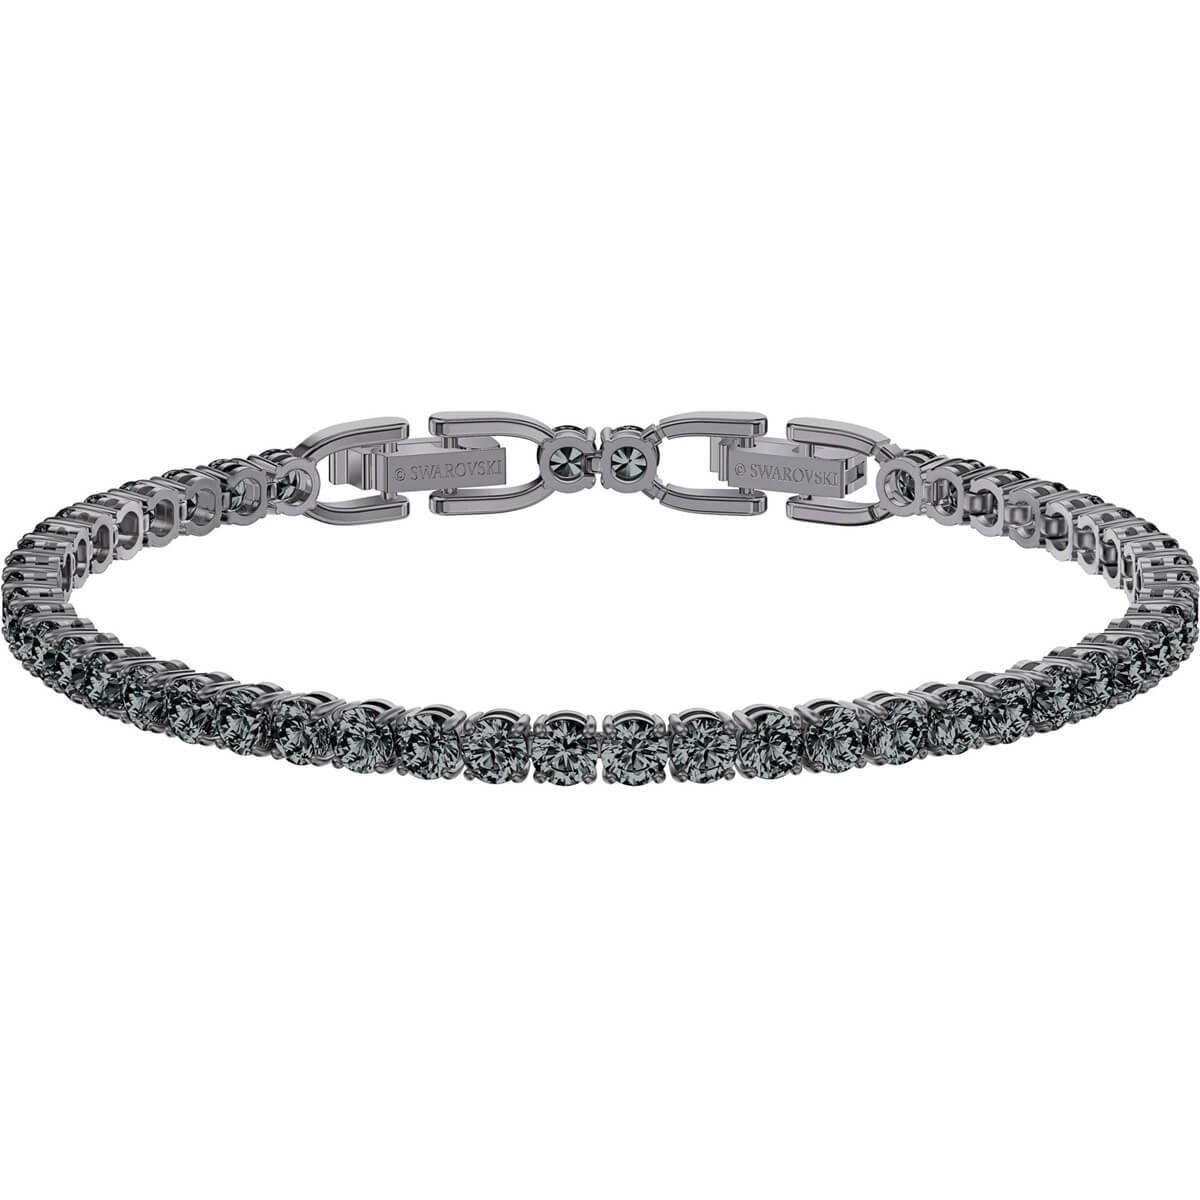 Swarovski Unisex Tennis Swarovski Crystal Gray Ruthenium-Plated Deluxe Bracelet - $200.00